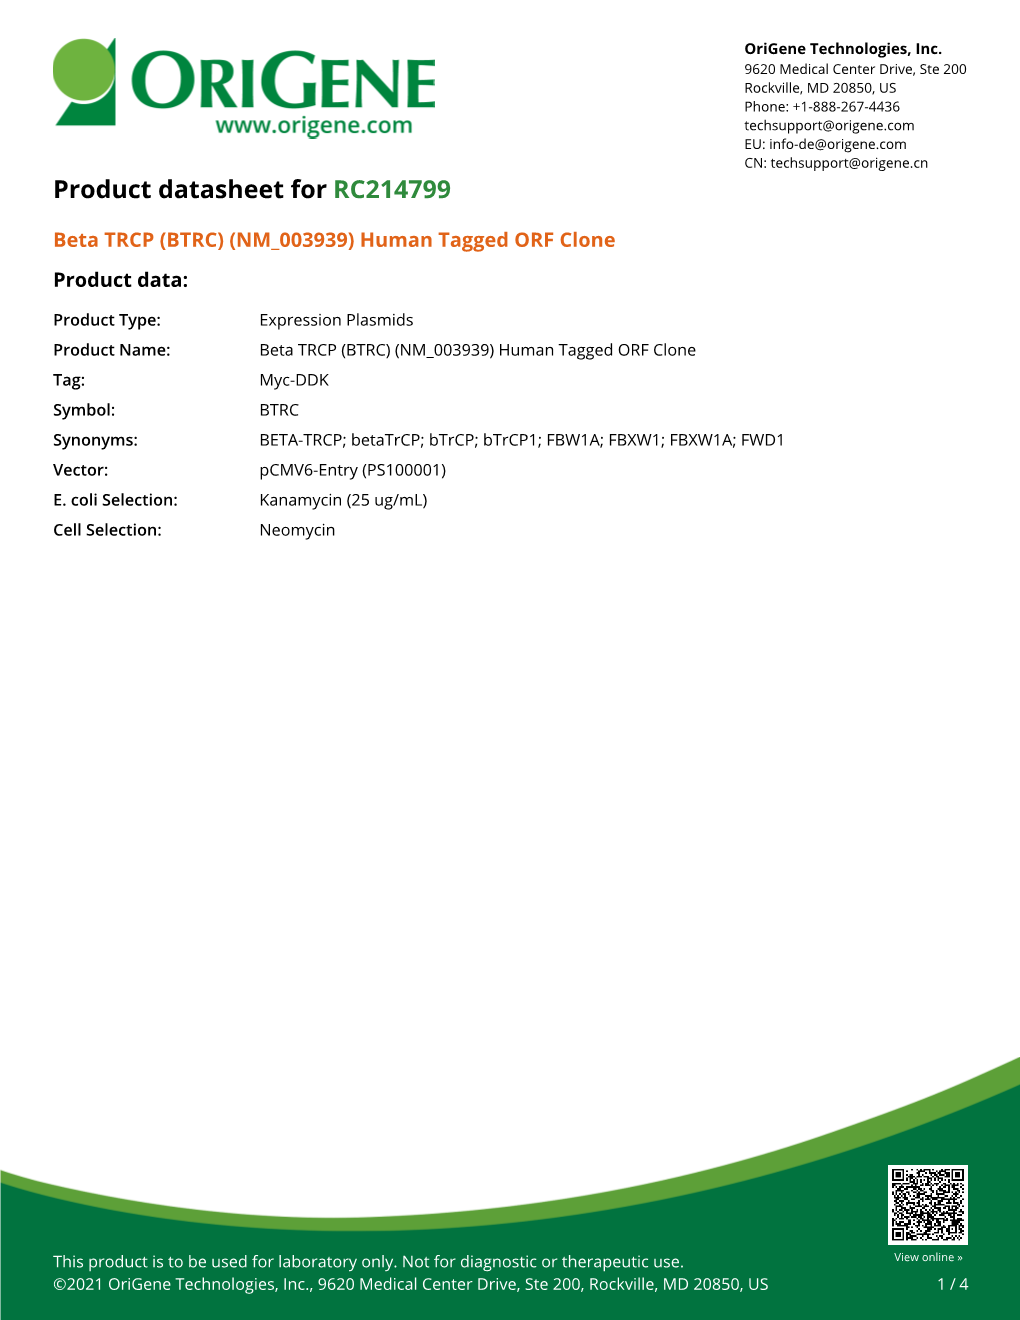 Beta TRCP (BTRC) (NM 003939) Human Tagged ORF Clone Product Data